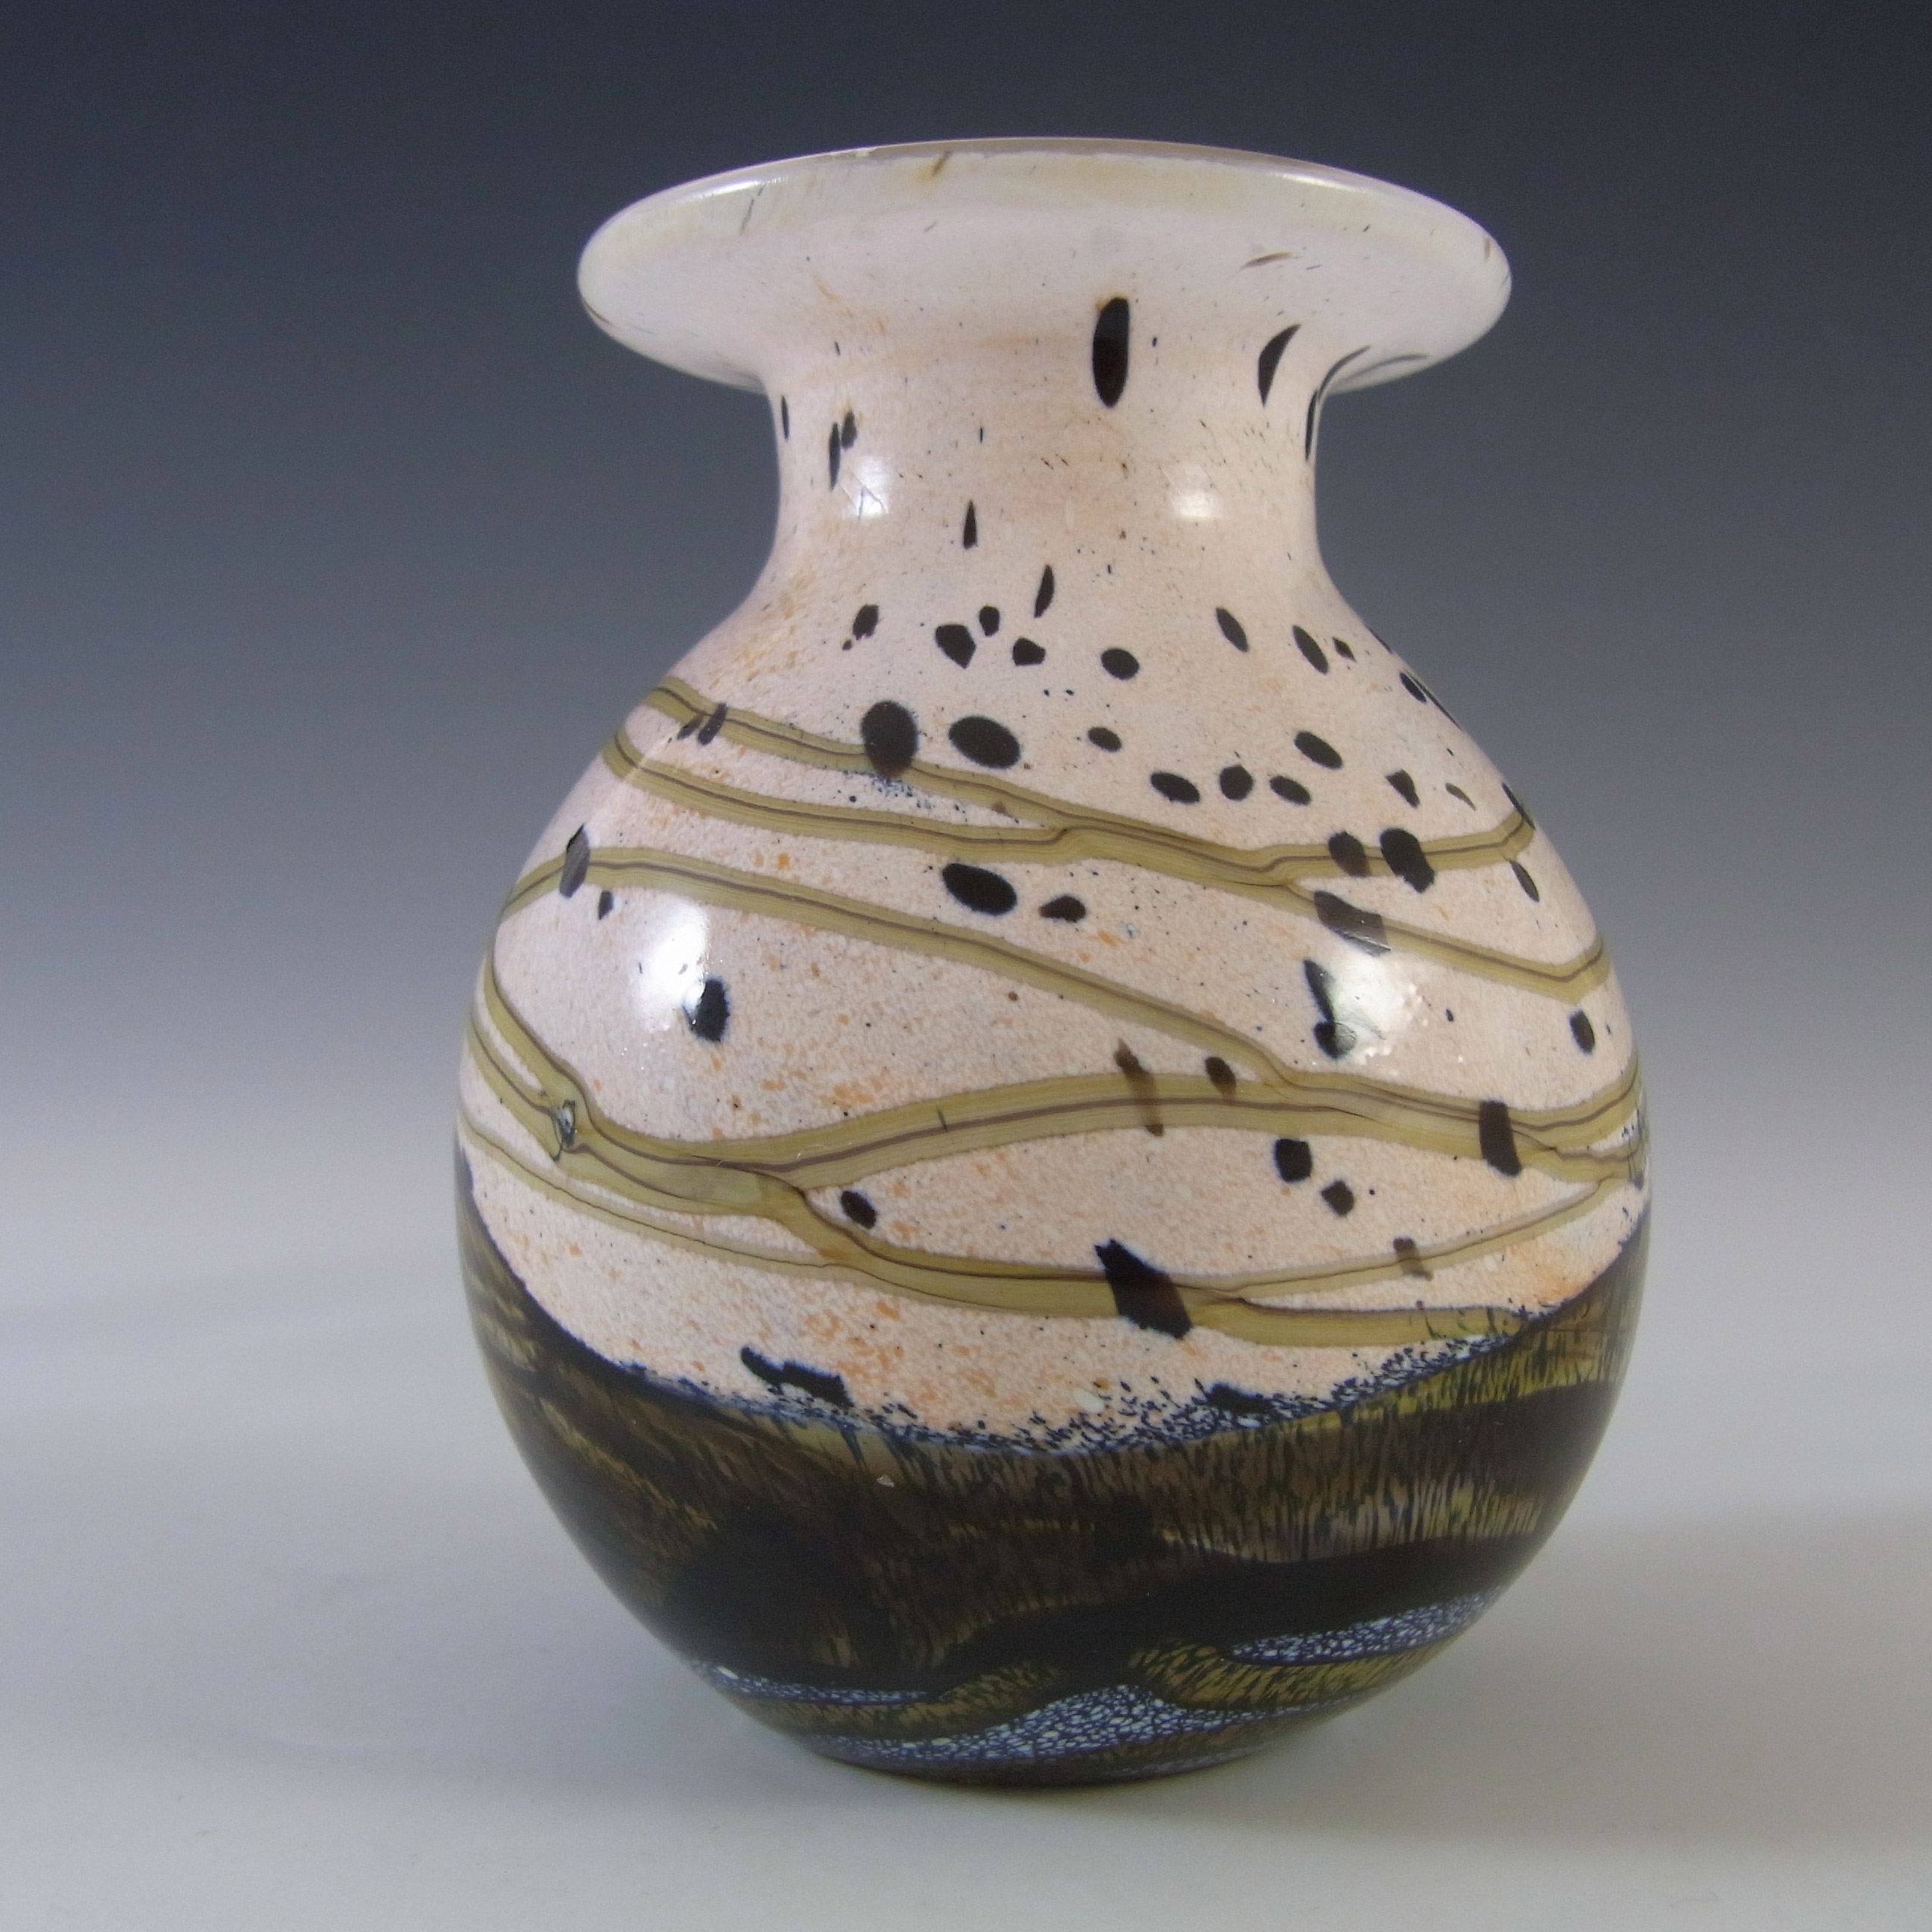 LABELLED Gozo Maltese Glass 'Seashell' Vase - Click Image to Close